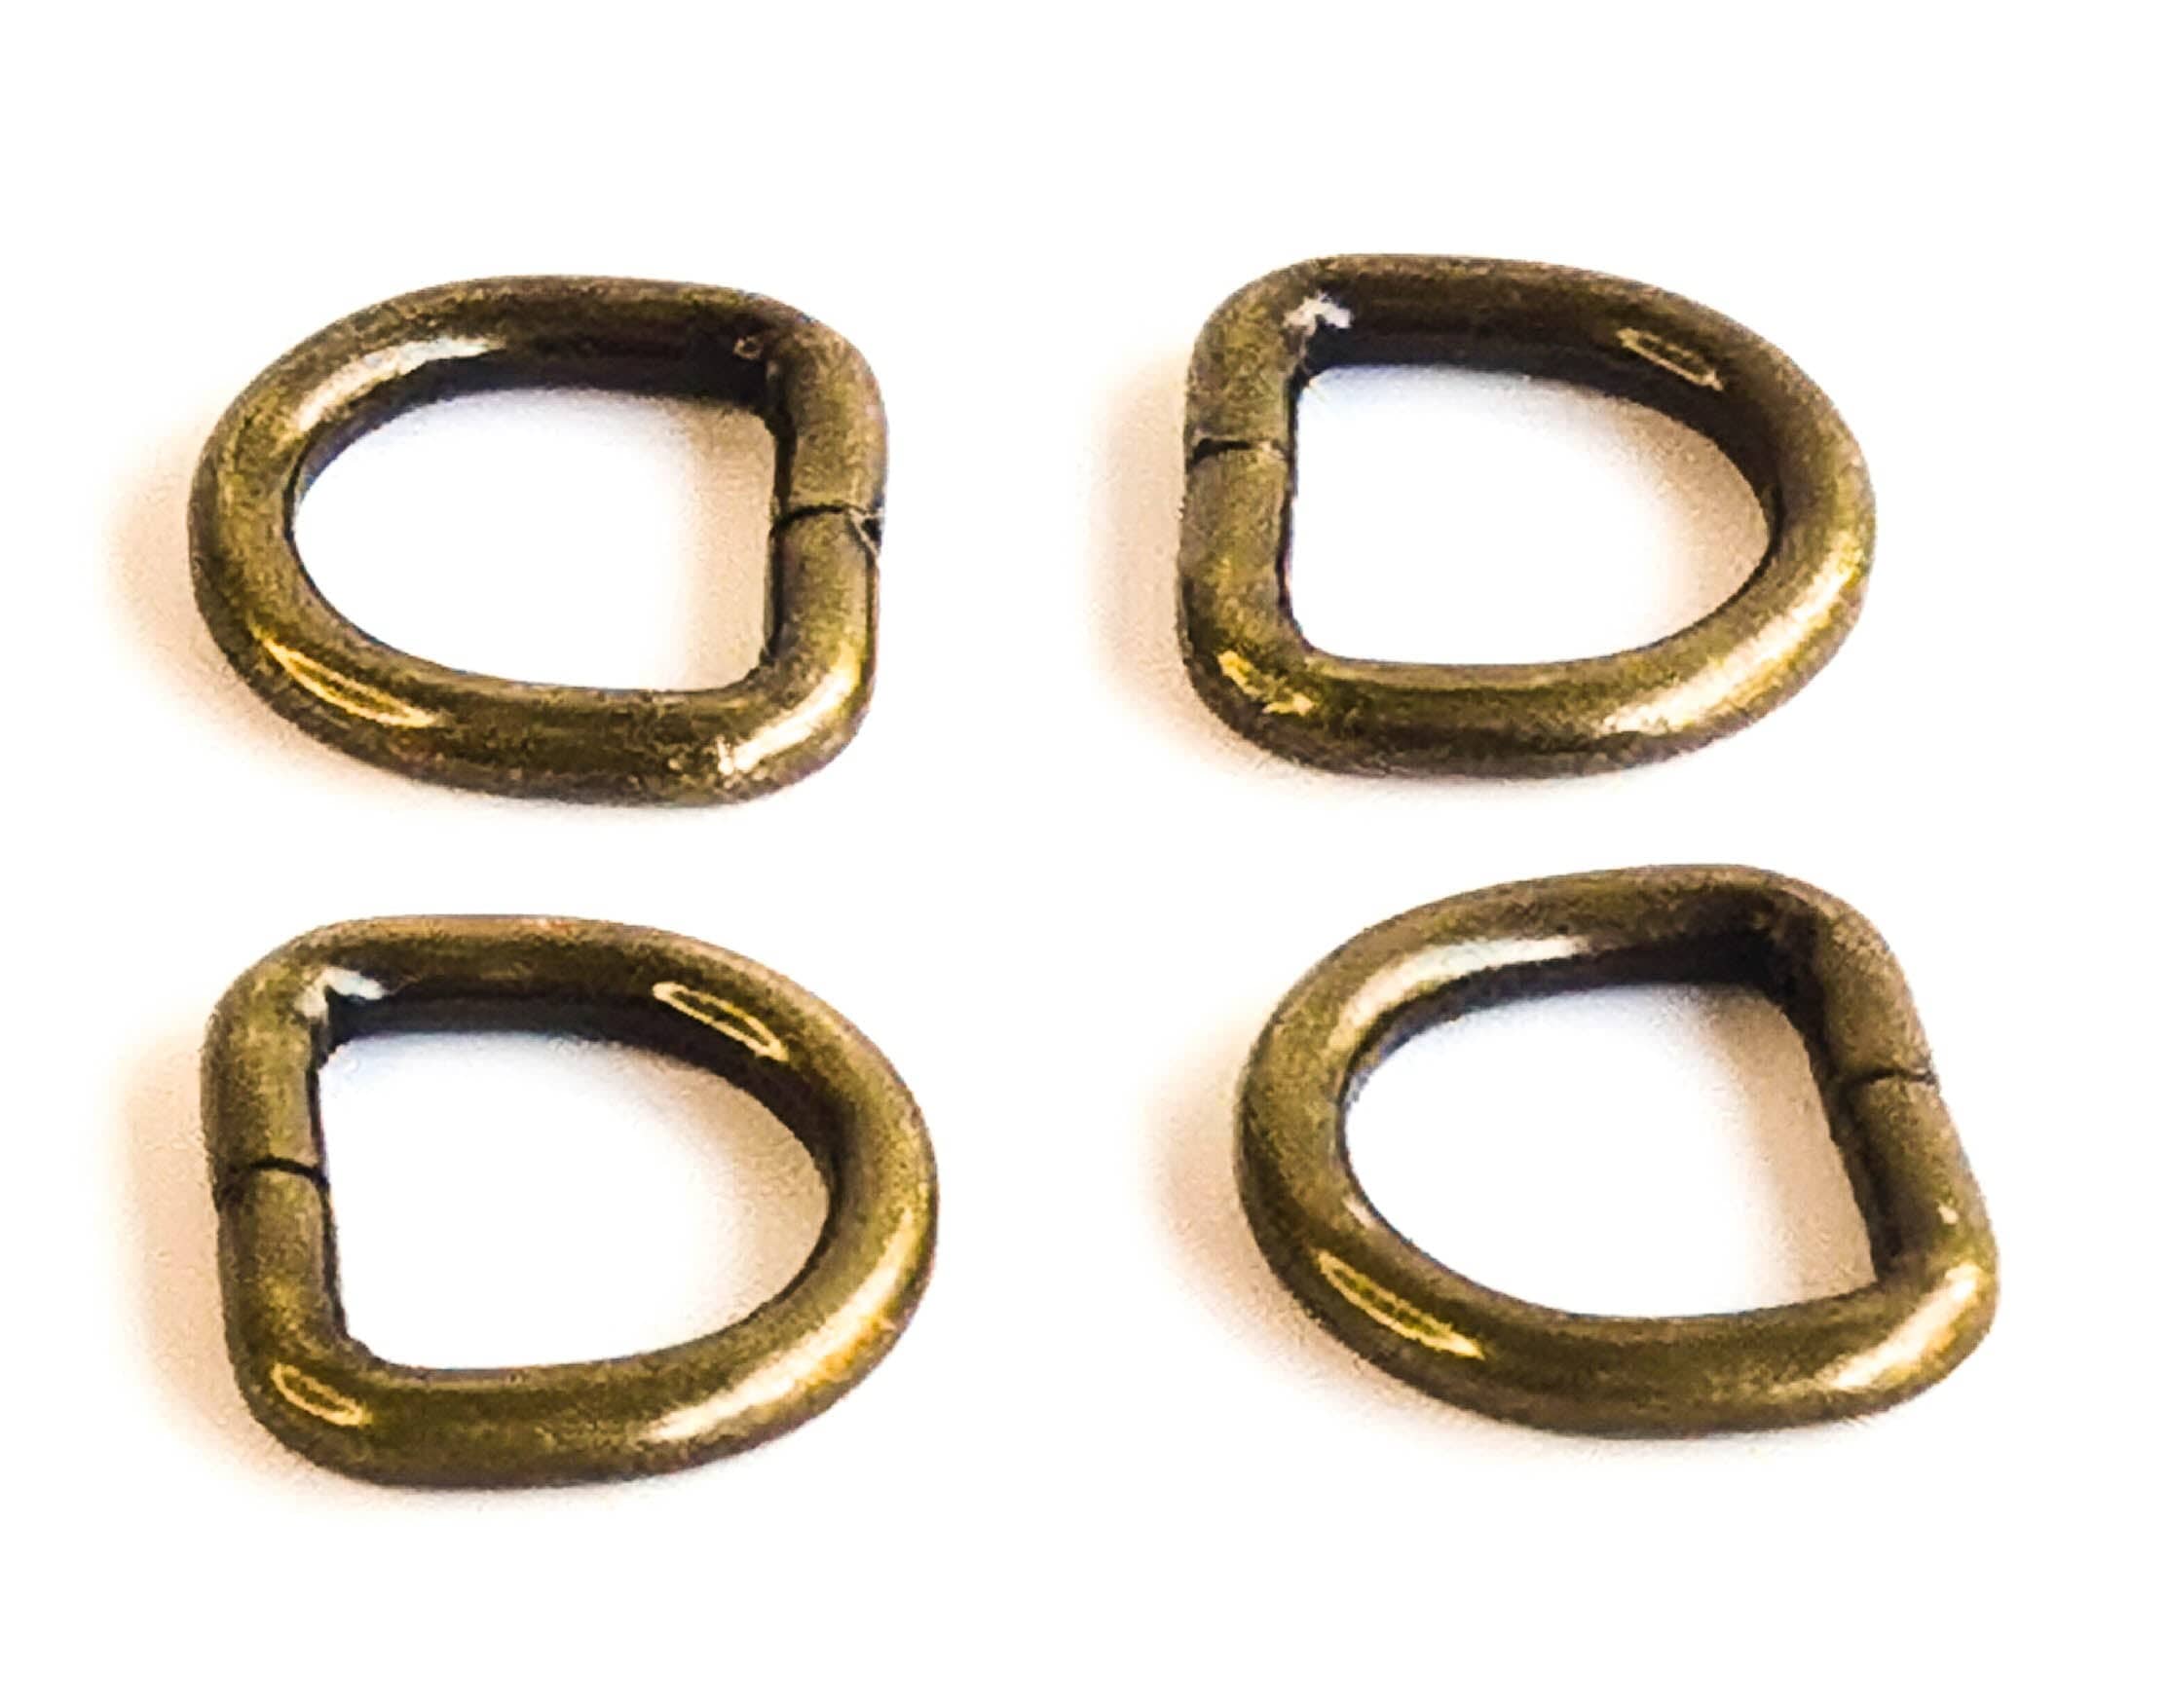 Kiwi Bagineers Ring 1/2" (13mm) / Antique Brass D rings for bags.. Pack of 4. Kiwi Bagineers